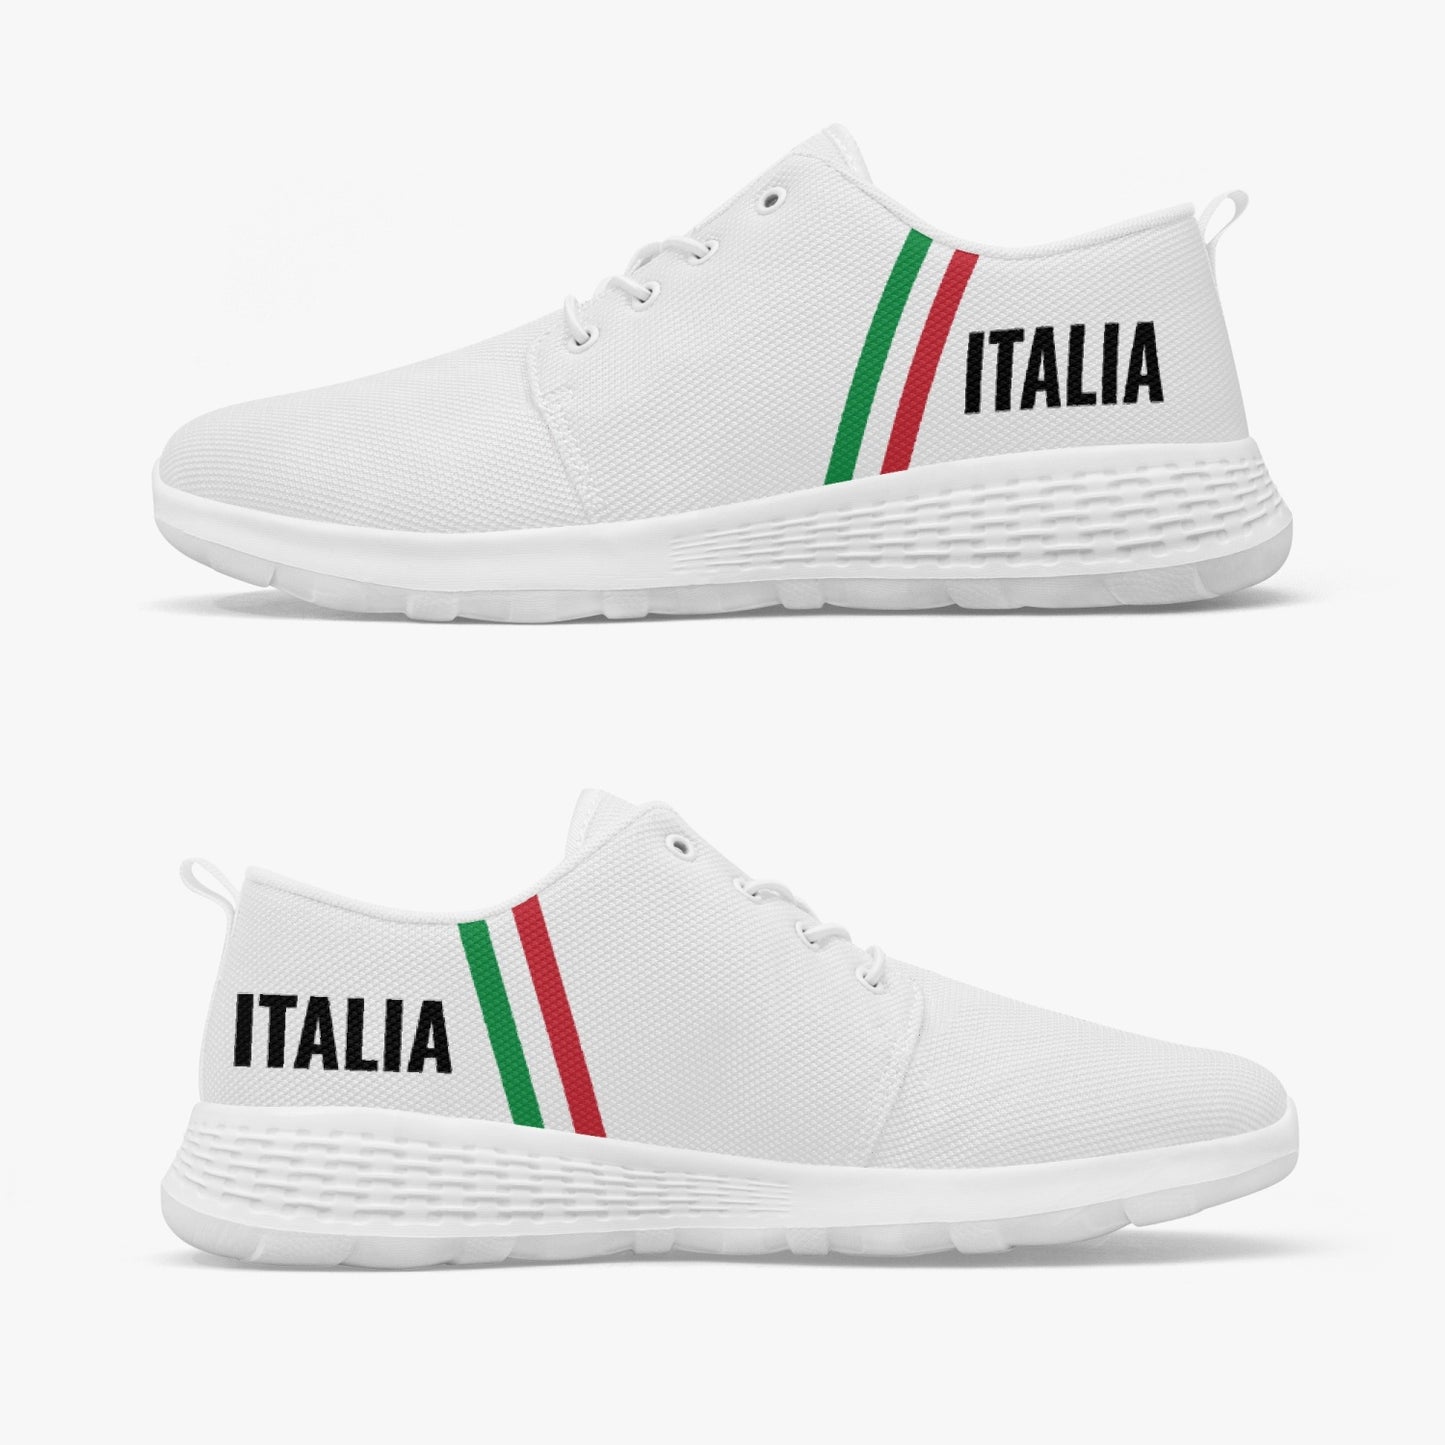 Italy Running Shoes - men's /women's sizes